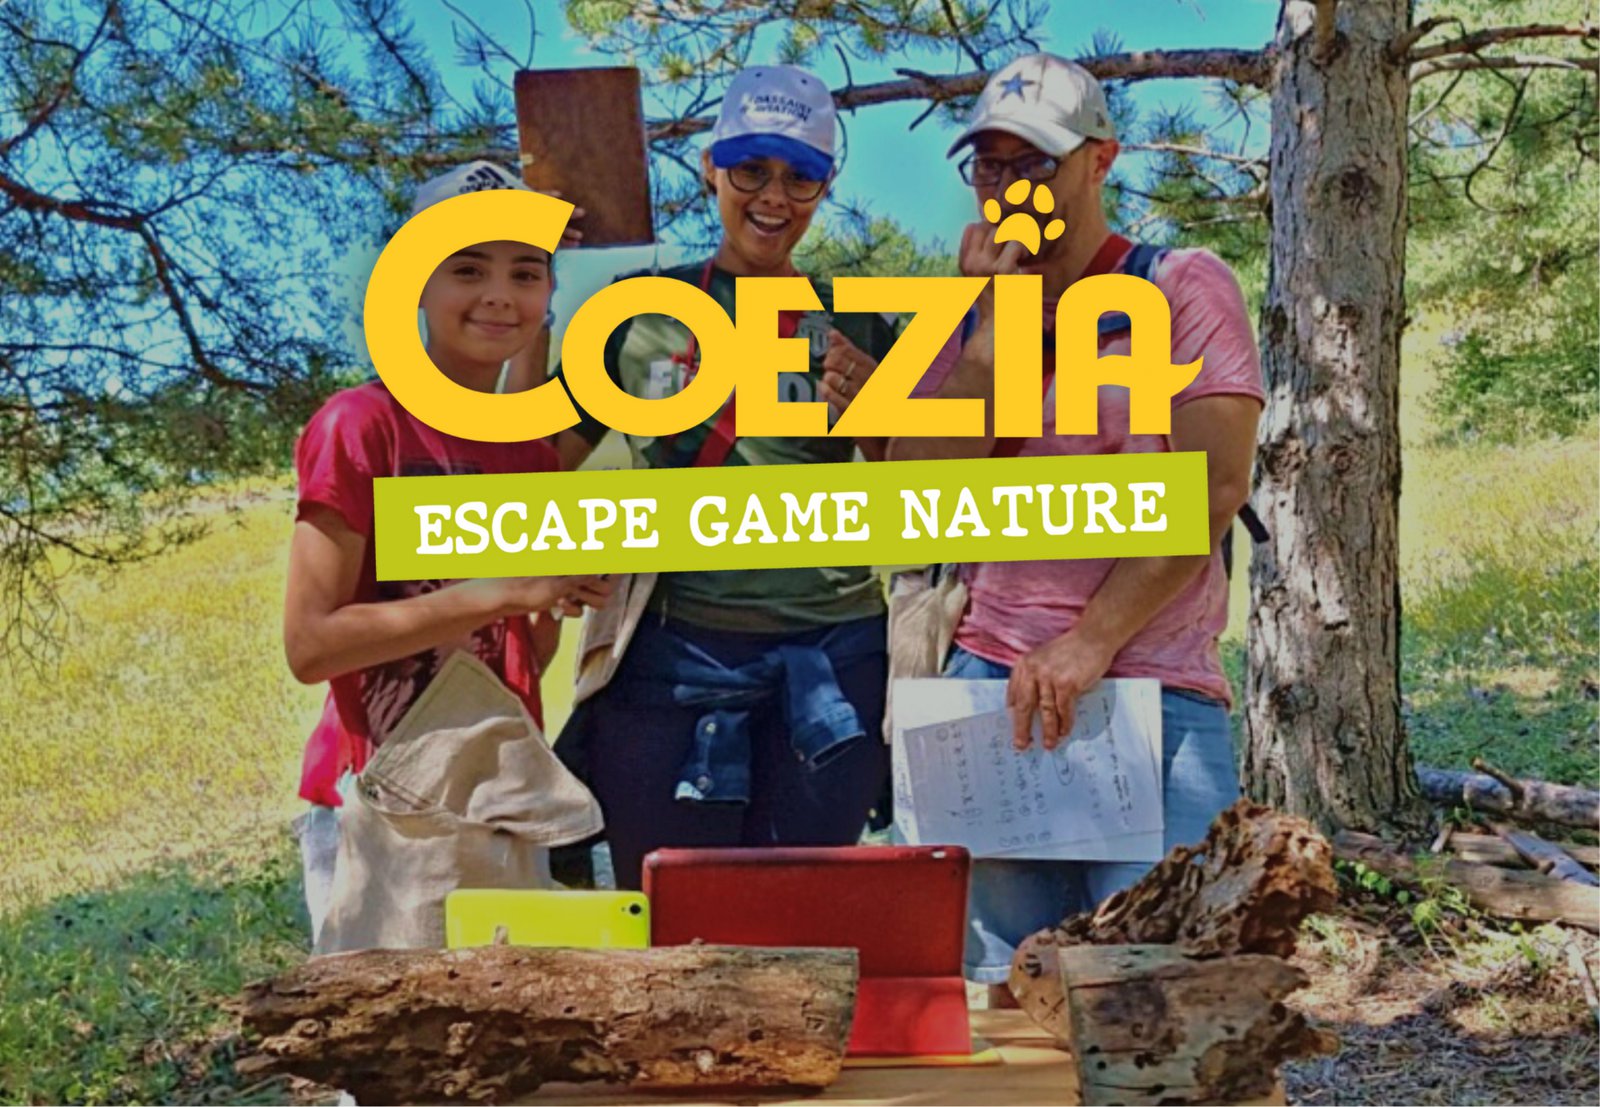 Coezia - Escape Game Nature